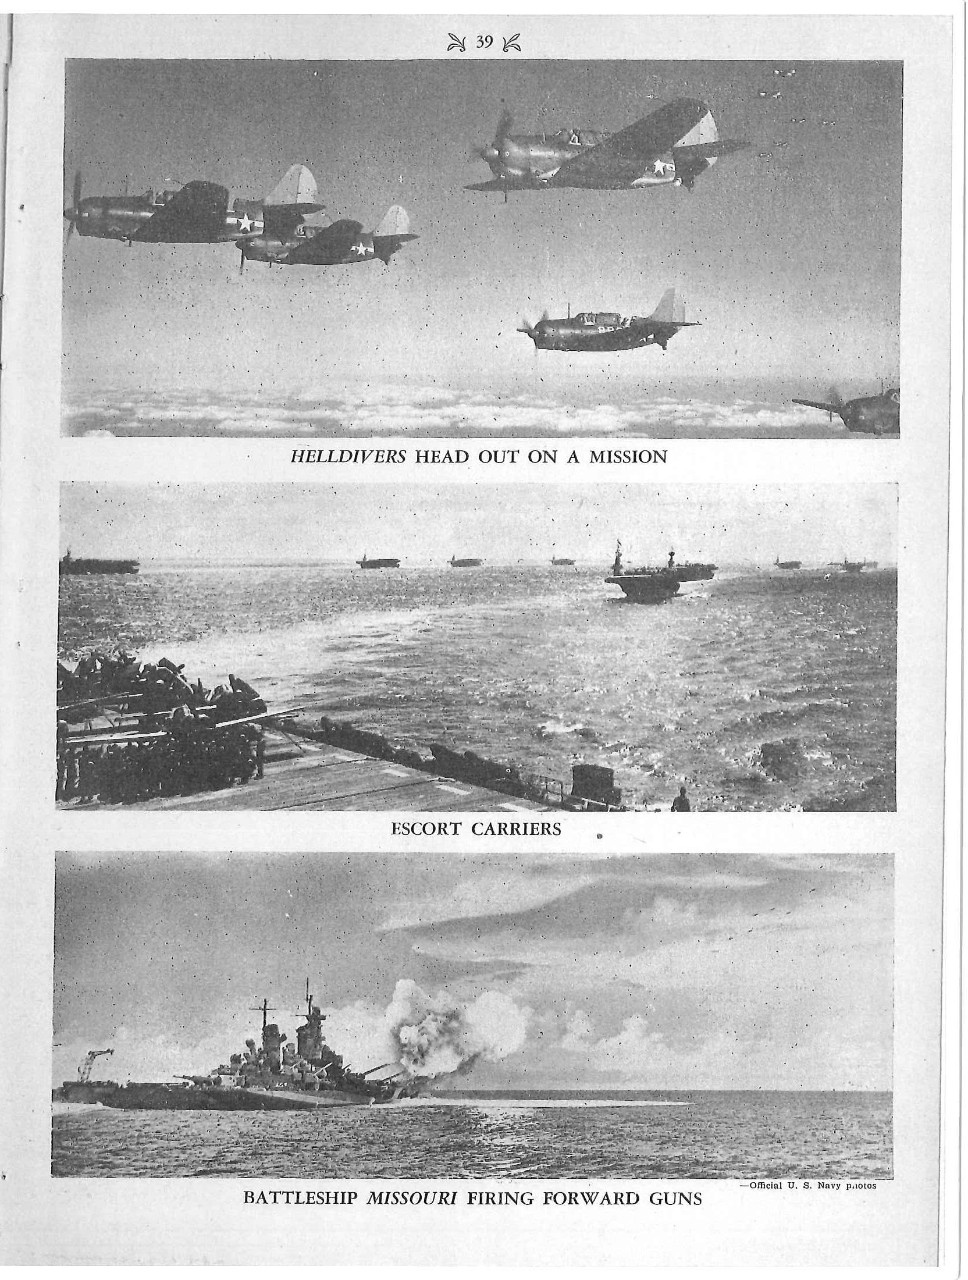 Helldivers head out on a mission, Escort Carriers, Battleship Missouri firing foward guns